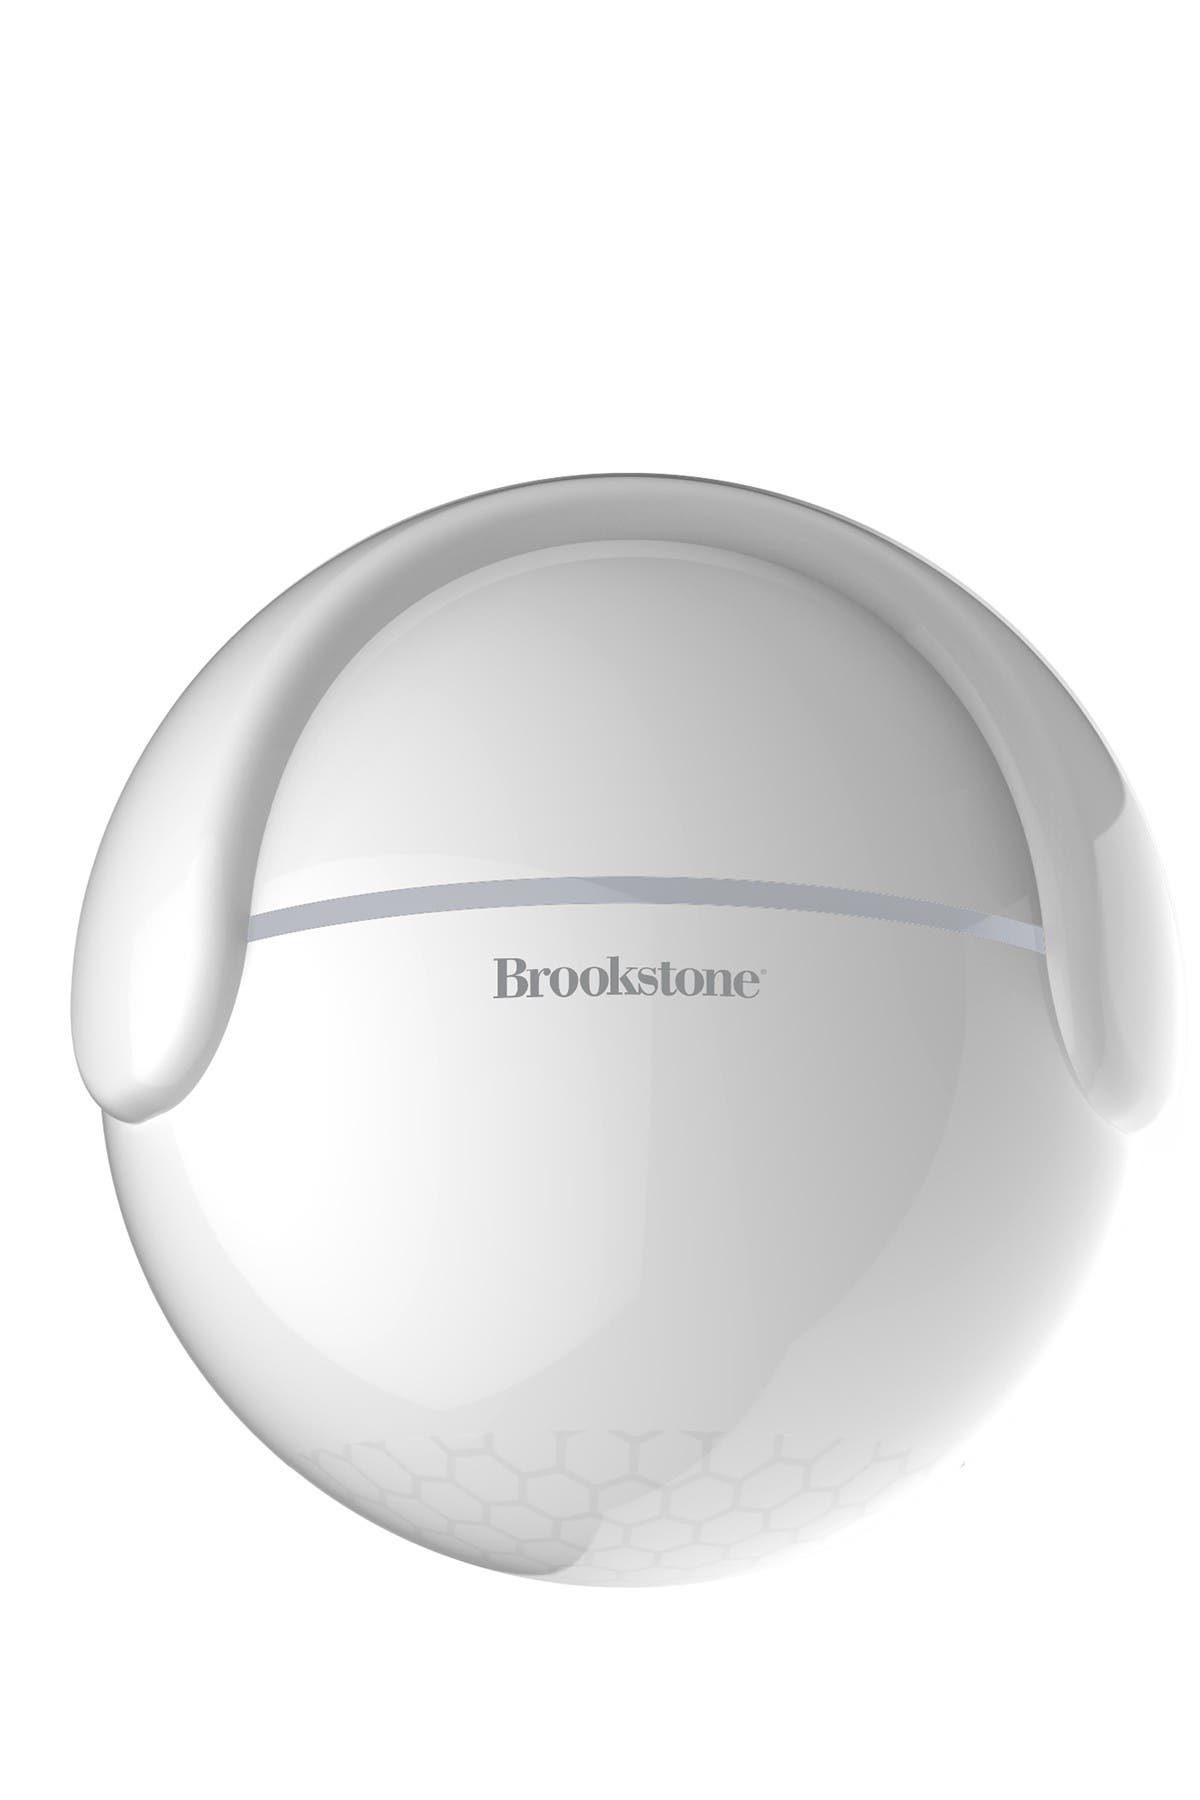 Brookstone Smart Motion Sensor In White